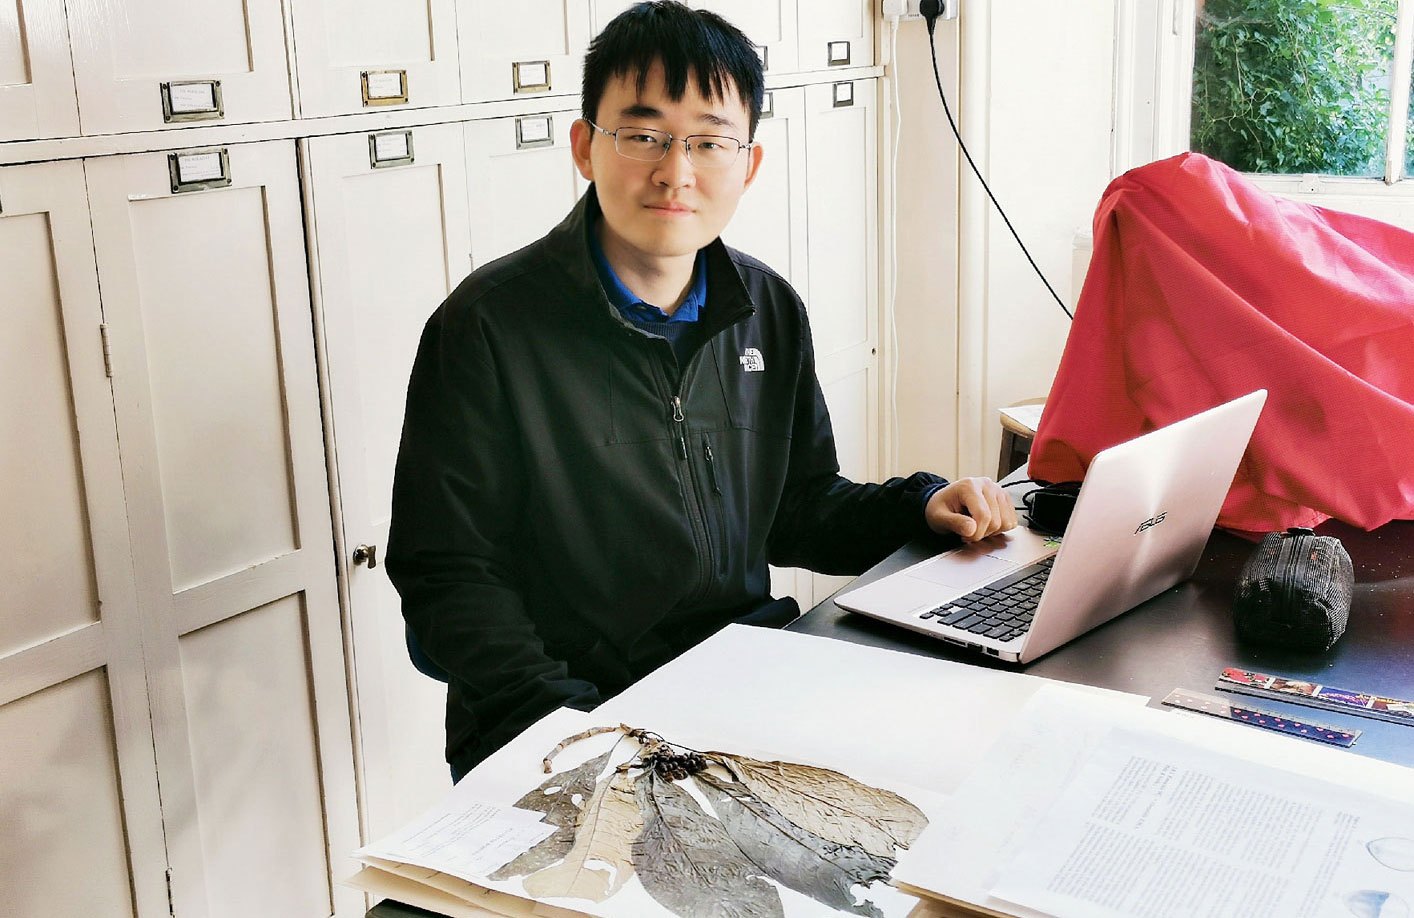 Student in the Herbarium with a laptop and herbarium specimen